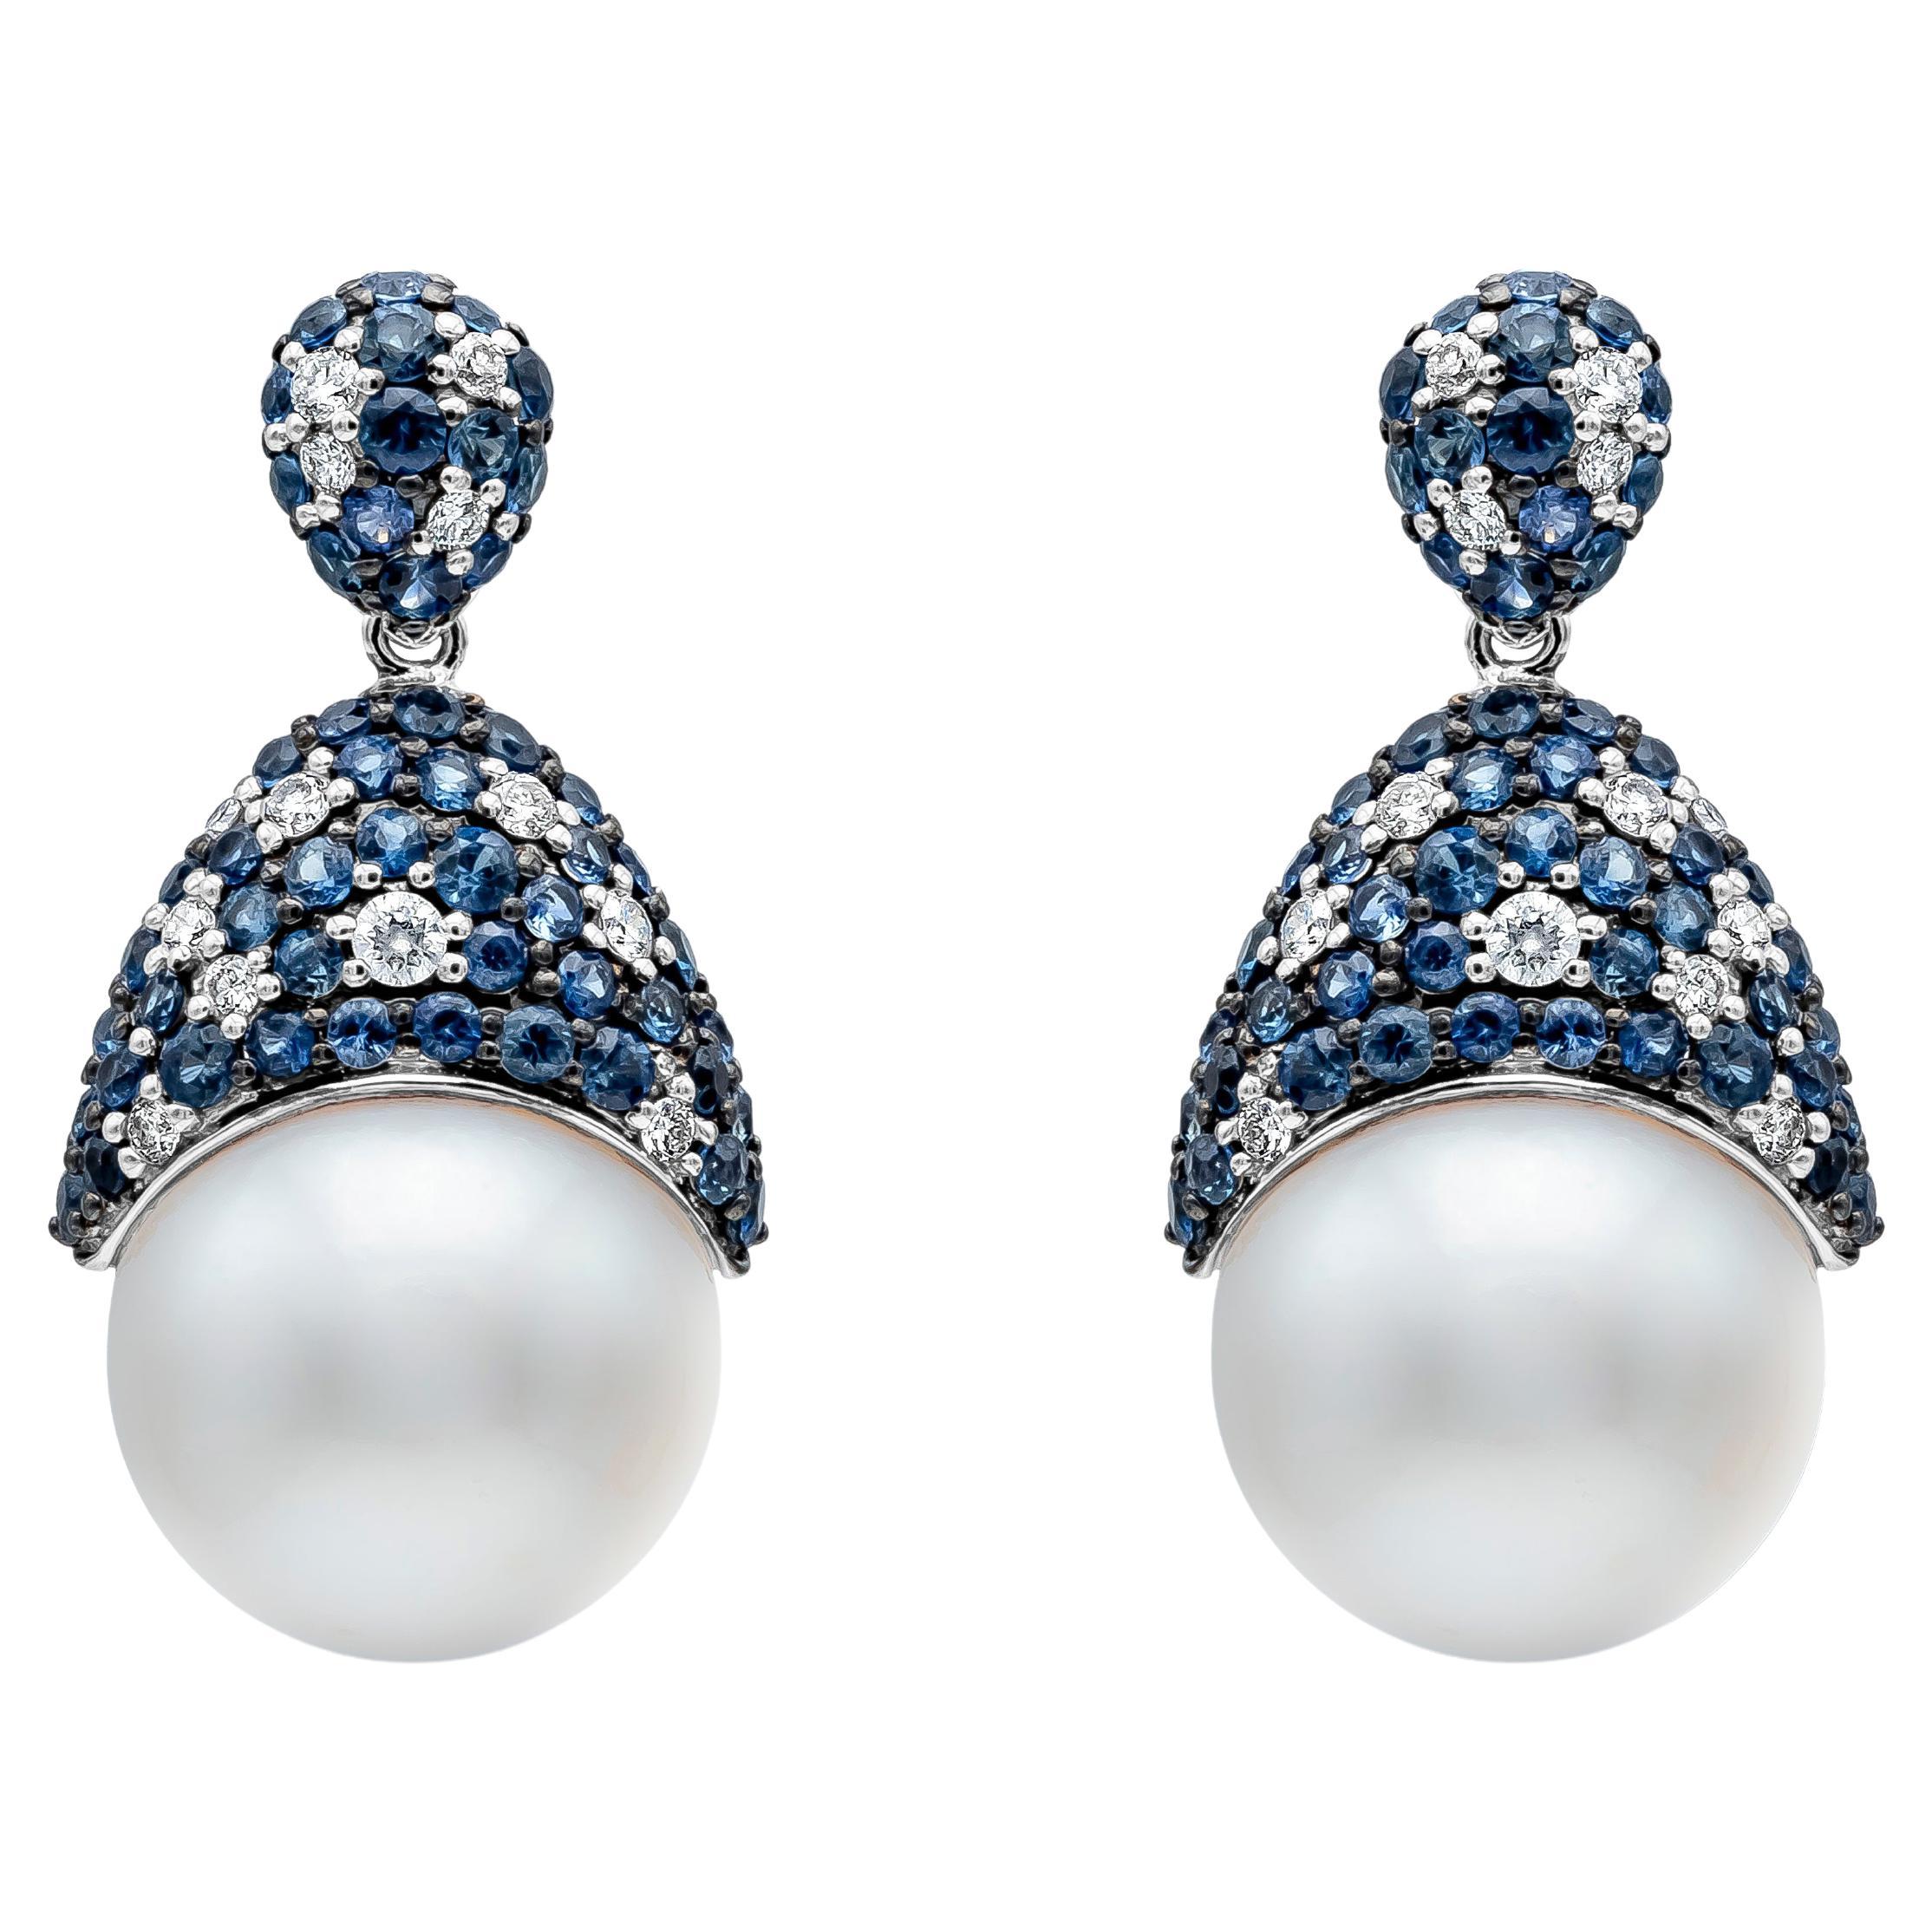 Roman Malakov 3.07 Carat Total Blue Sapphire and South Sea Pearl Stud Earrings